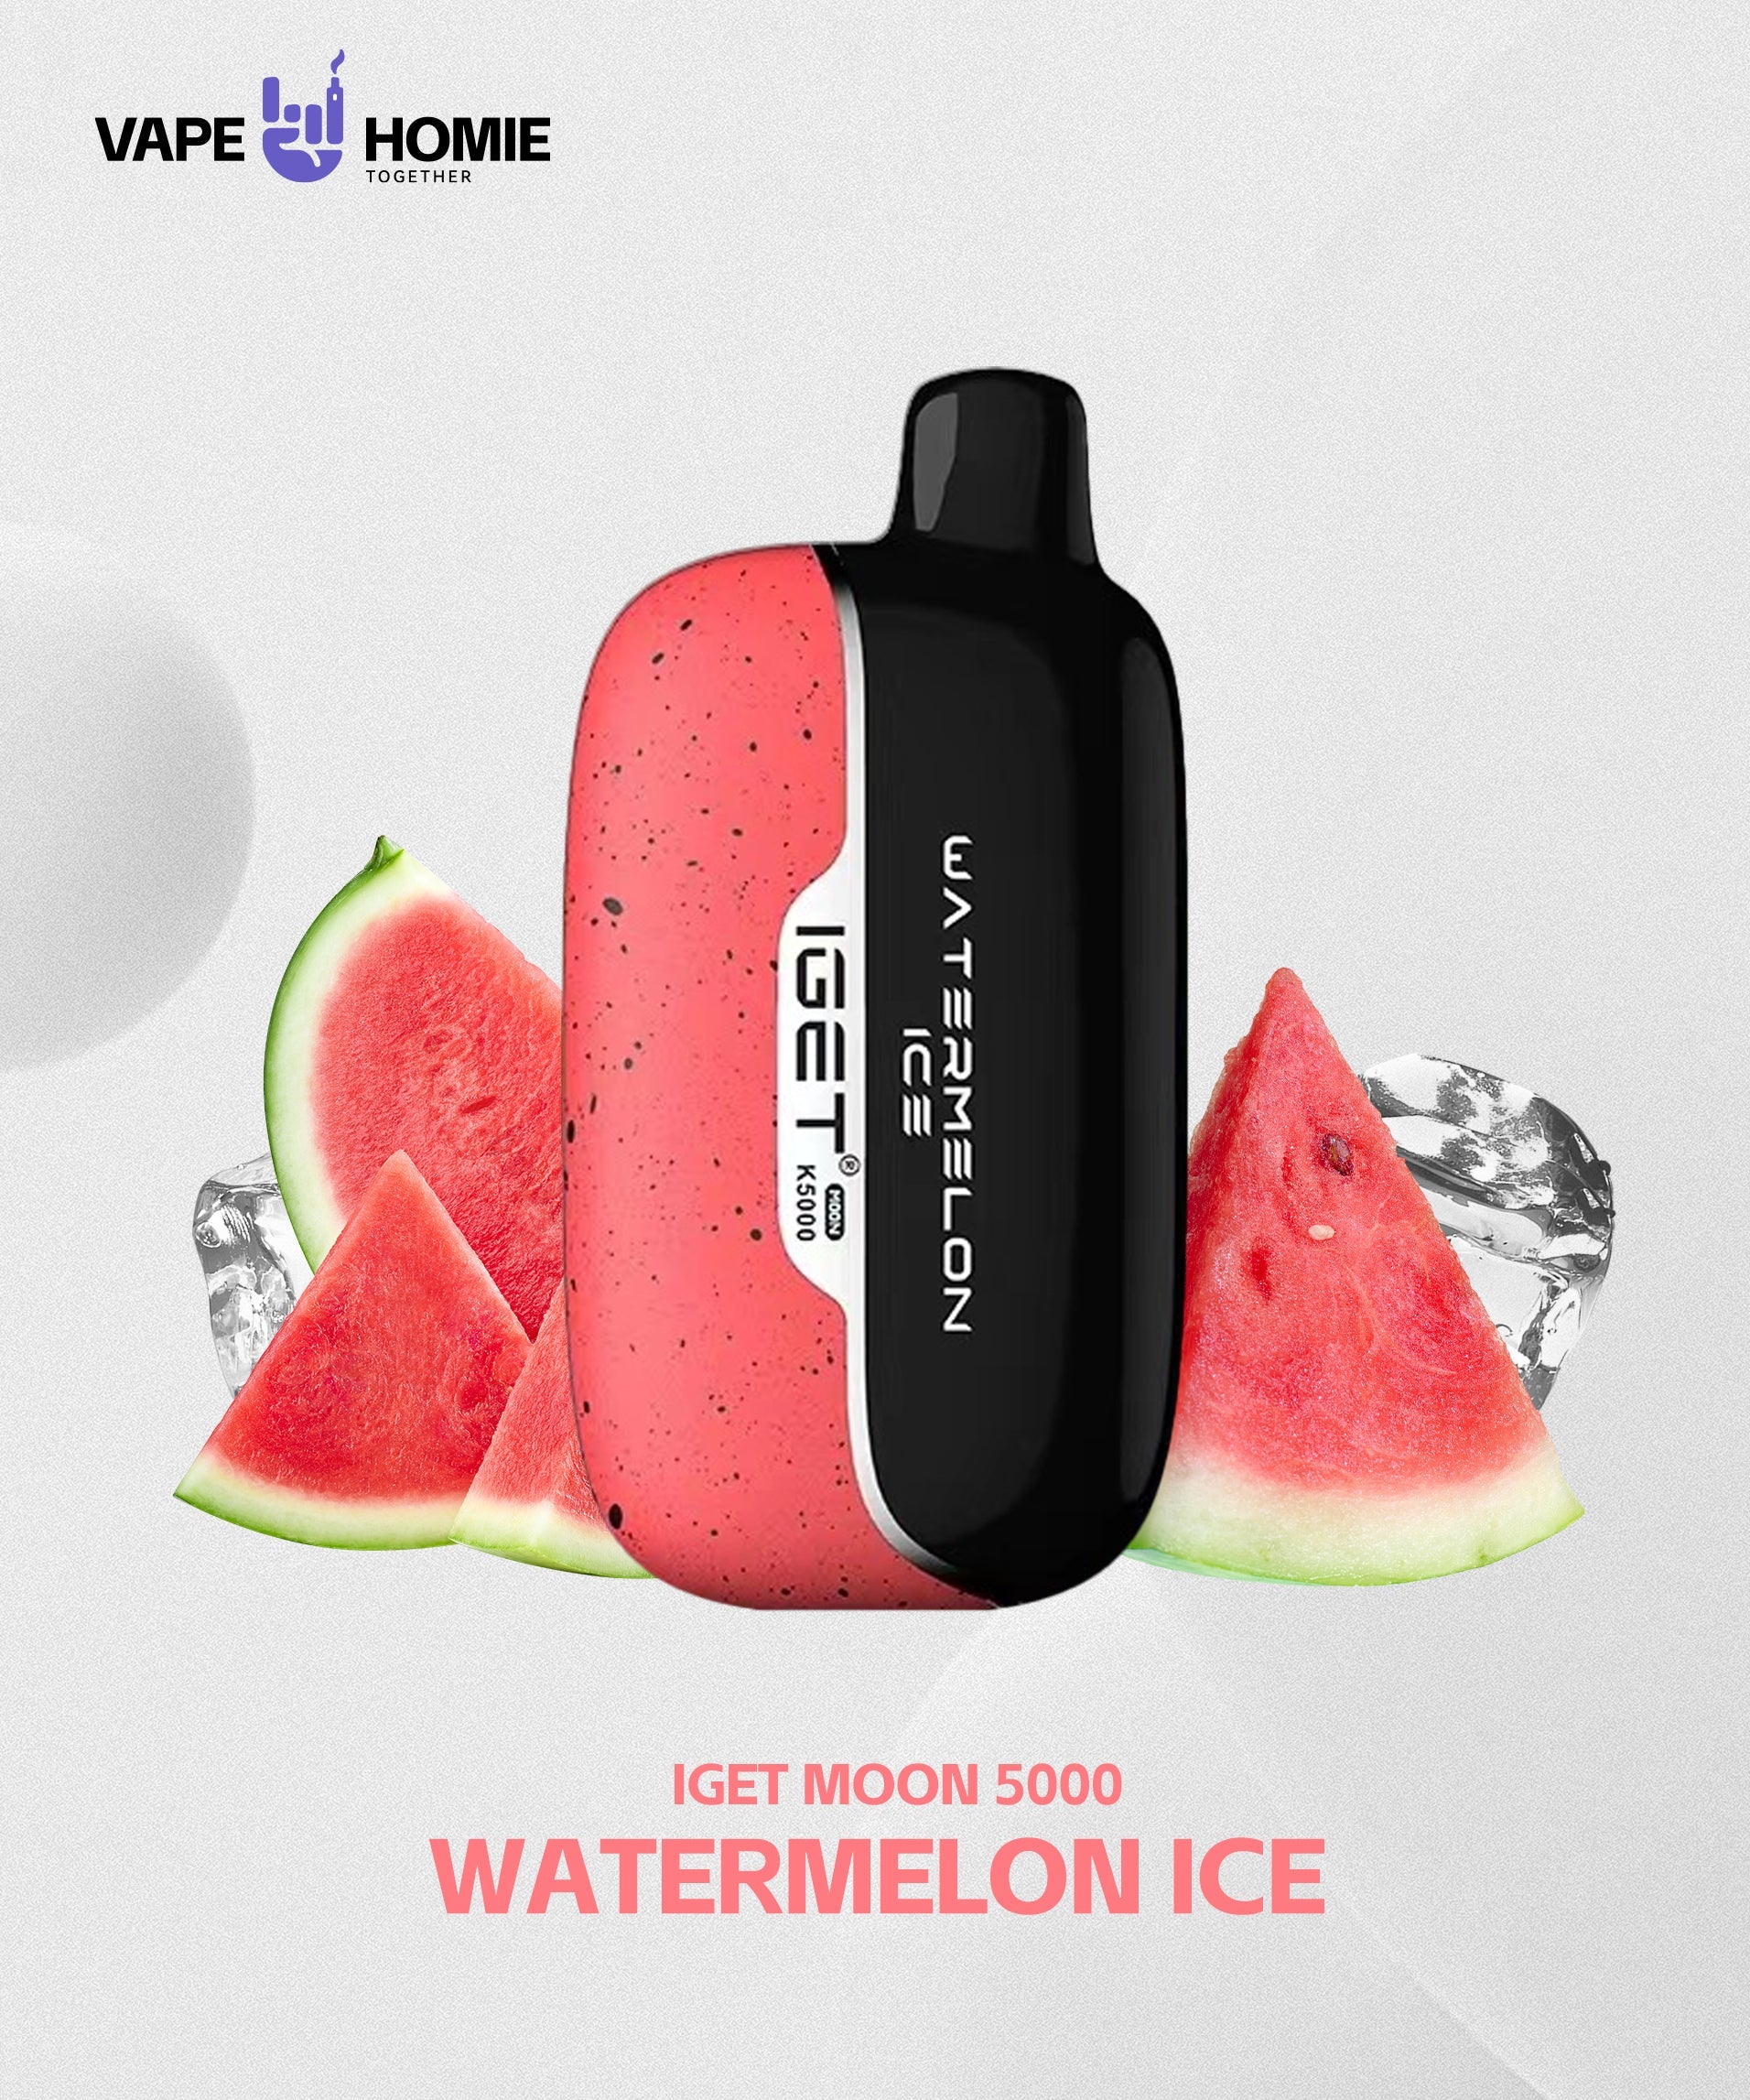 IGET MOON K5000 - WATERMELON ICE